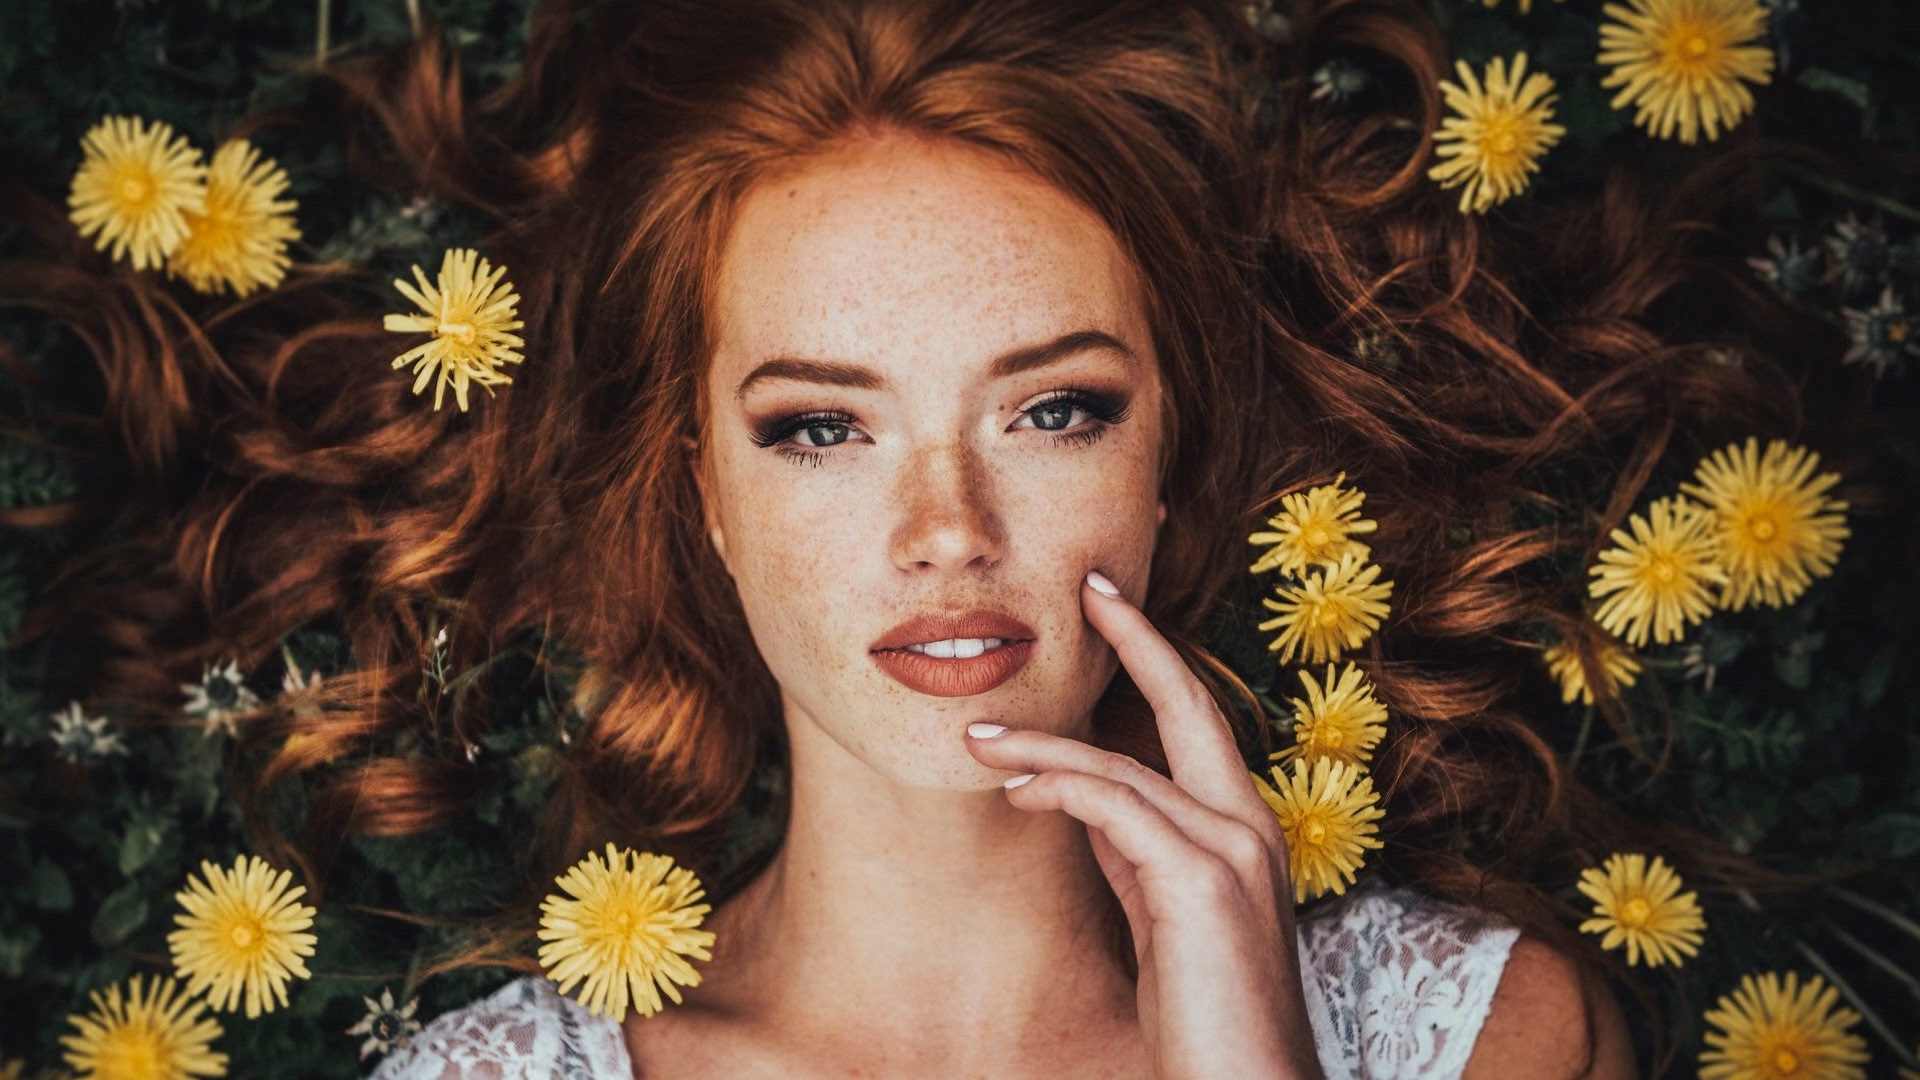 Free download wallpaper Redhead, Face, Model, Women, Yellow Flower, Freckles, Lying Down on your PC desktop